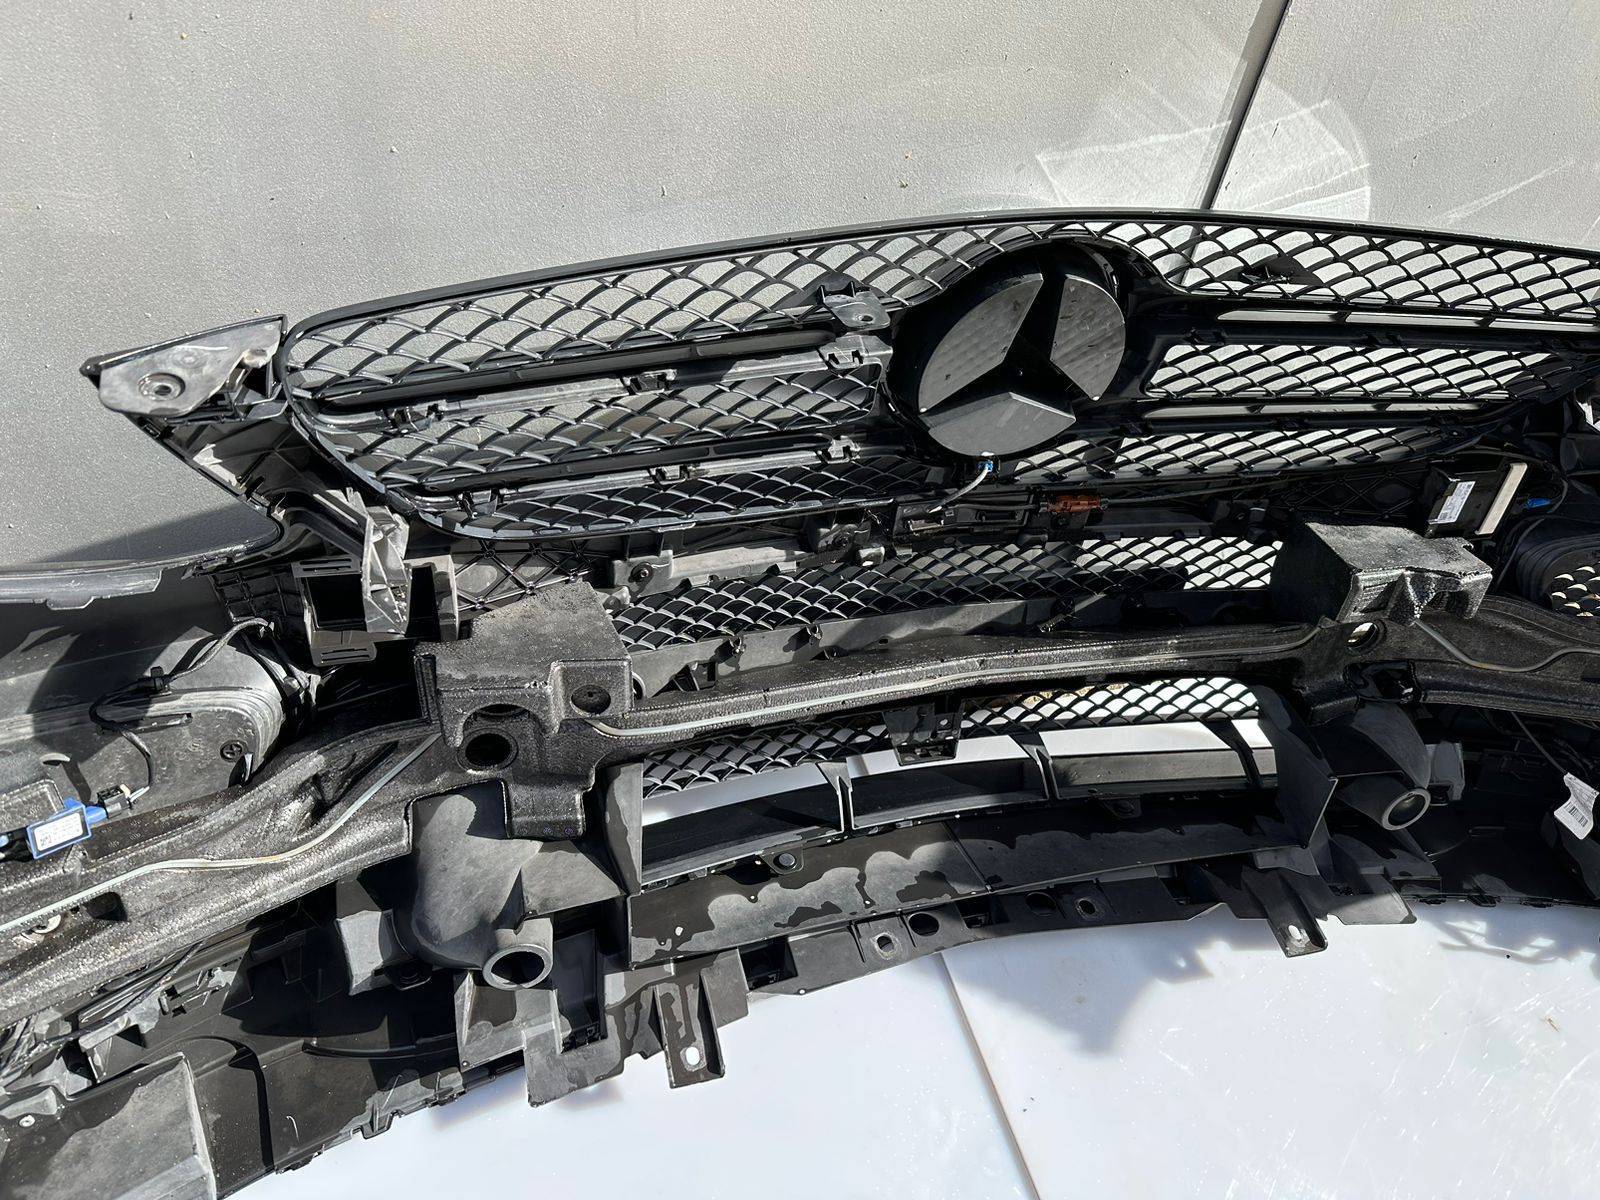 Бампер передний Mercedes GLE-Class (W166) купить в России